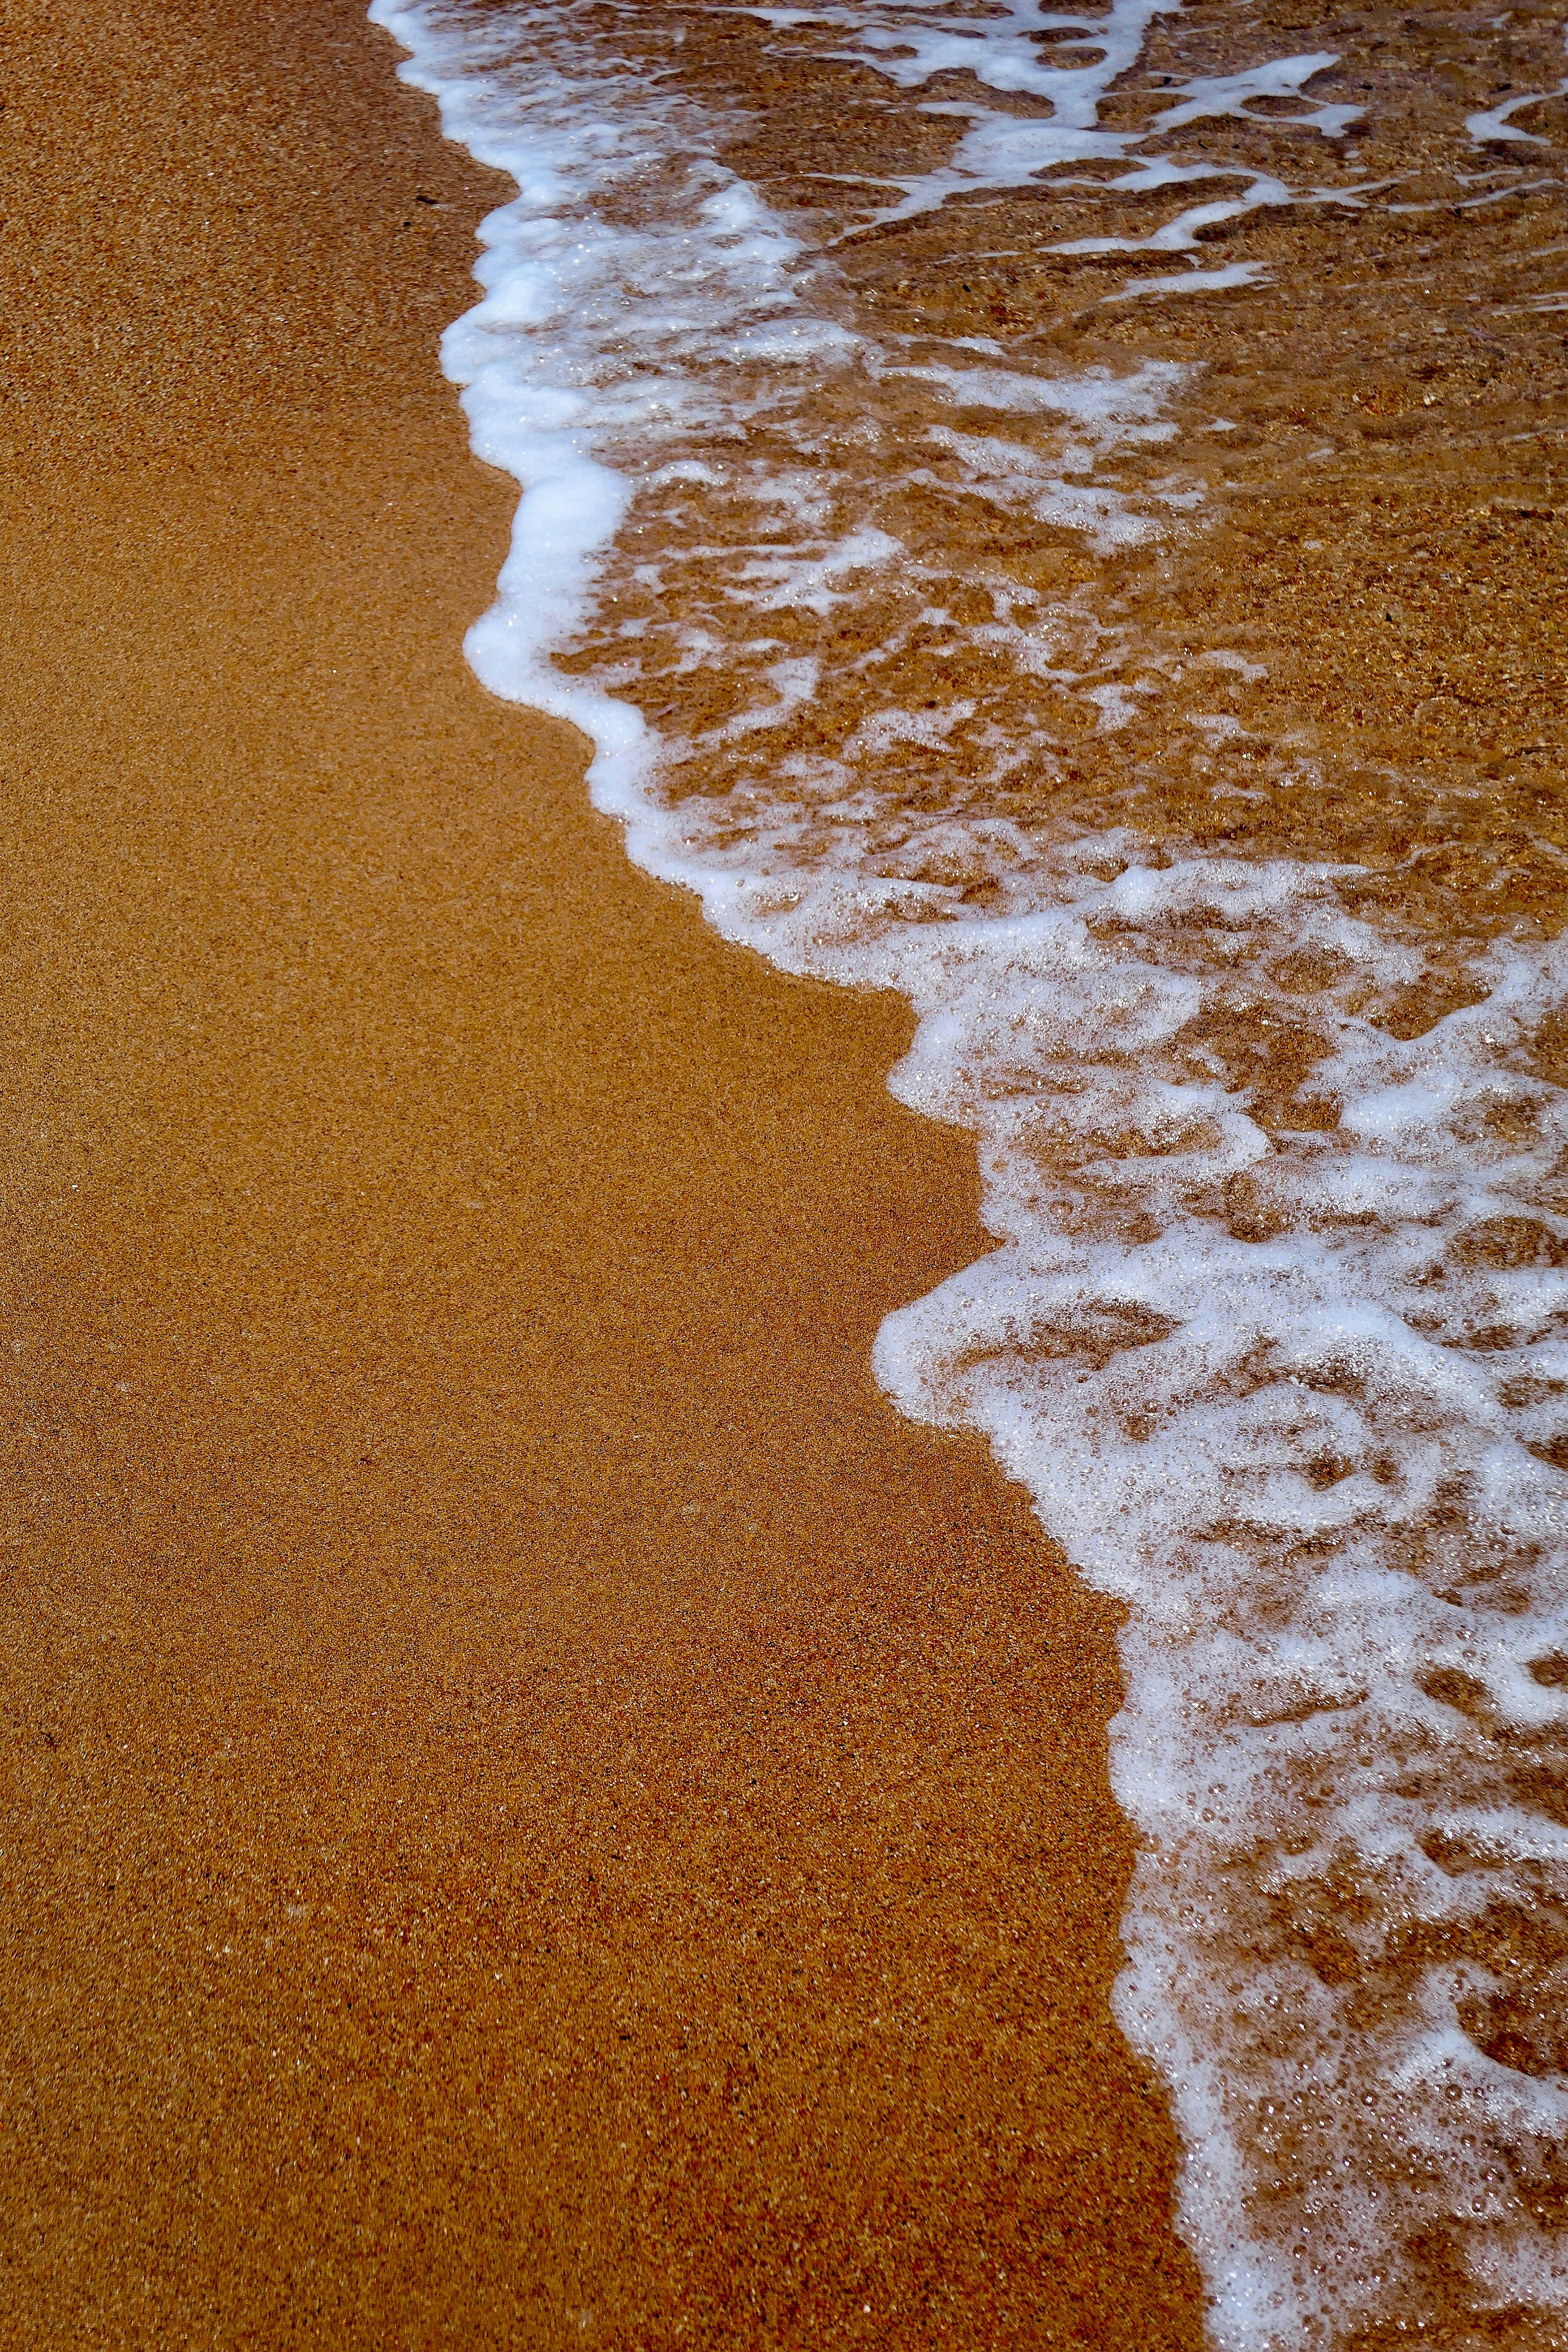 white sea foam on brown sandy beach